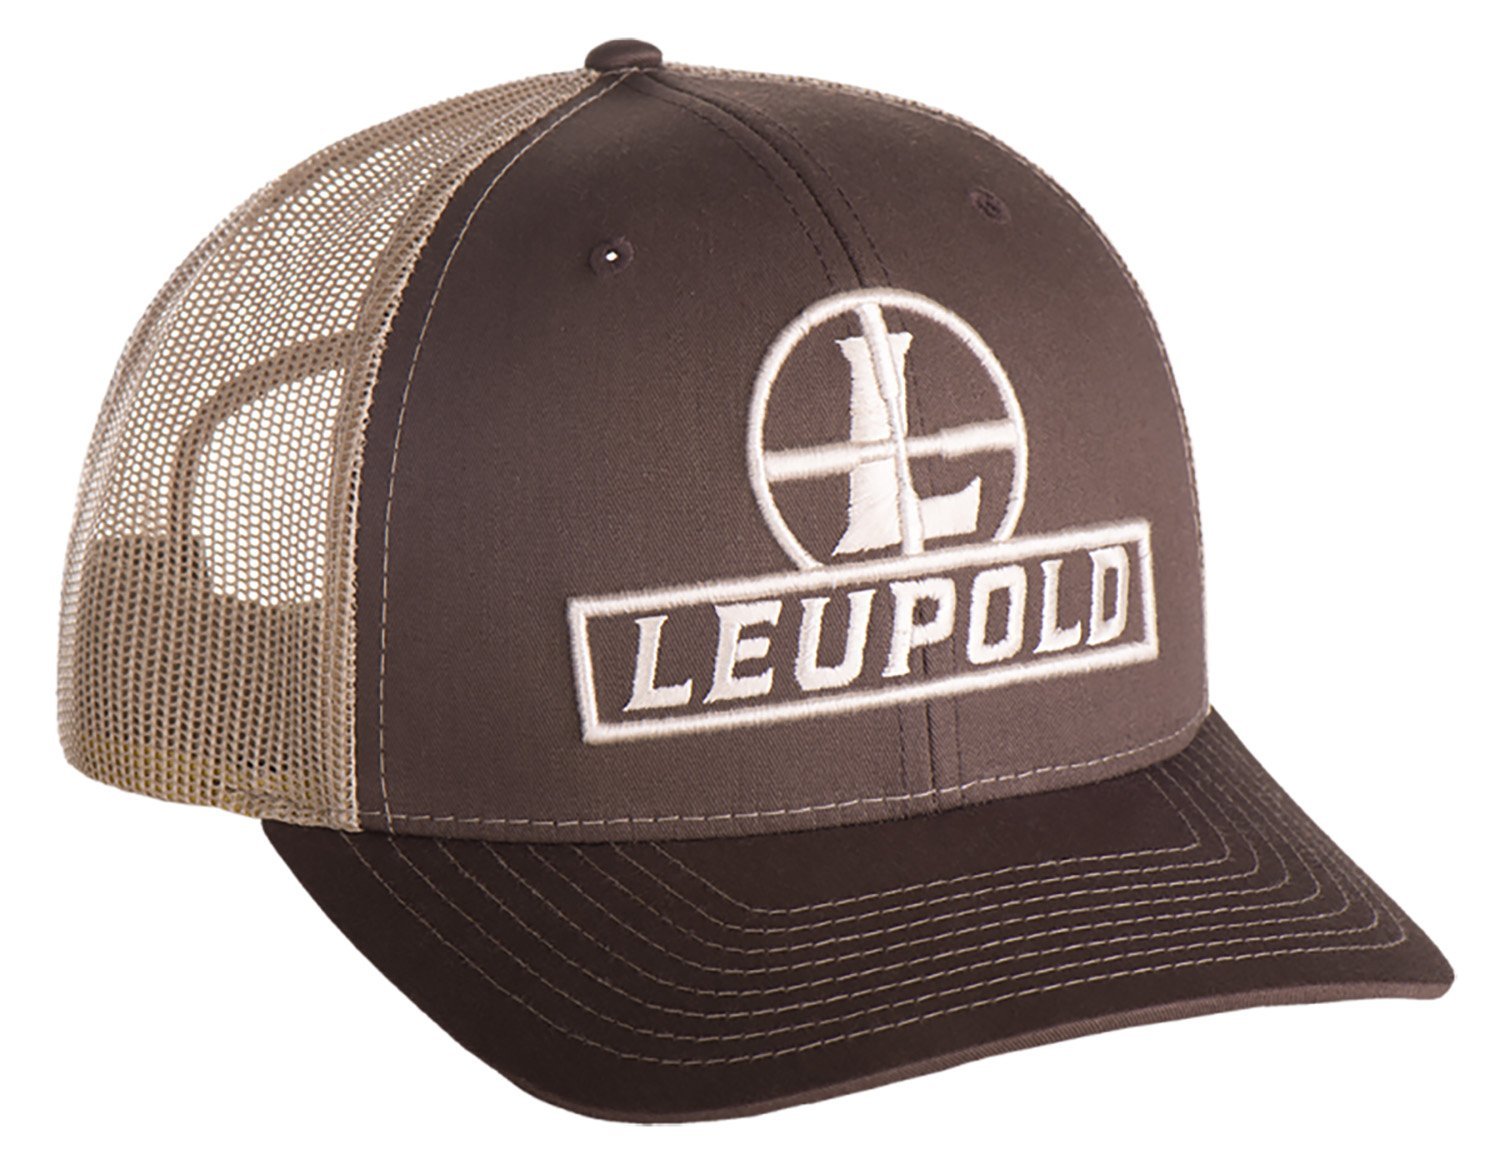 Leupold Reticle Trucker Hat Brown/Khaki - Pacific Flyway Supplies